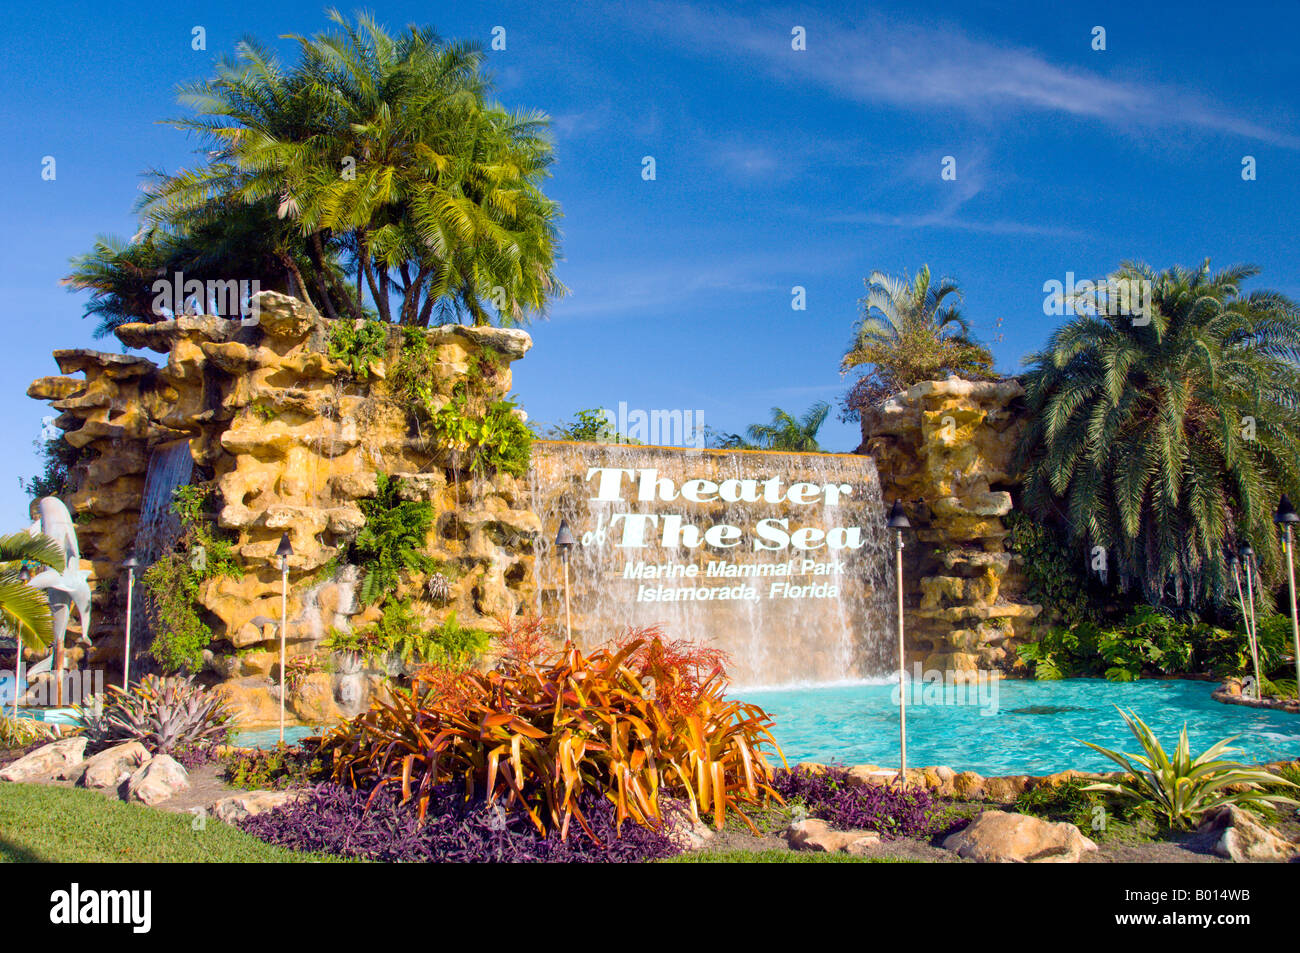 Das Theater von dem Meer Ortseingangsschild in Islamorada Florida Keys USA Stockfoto